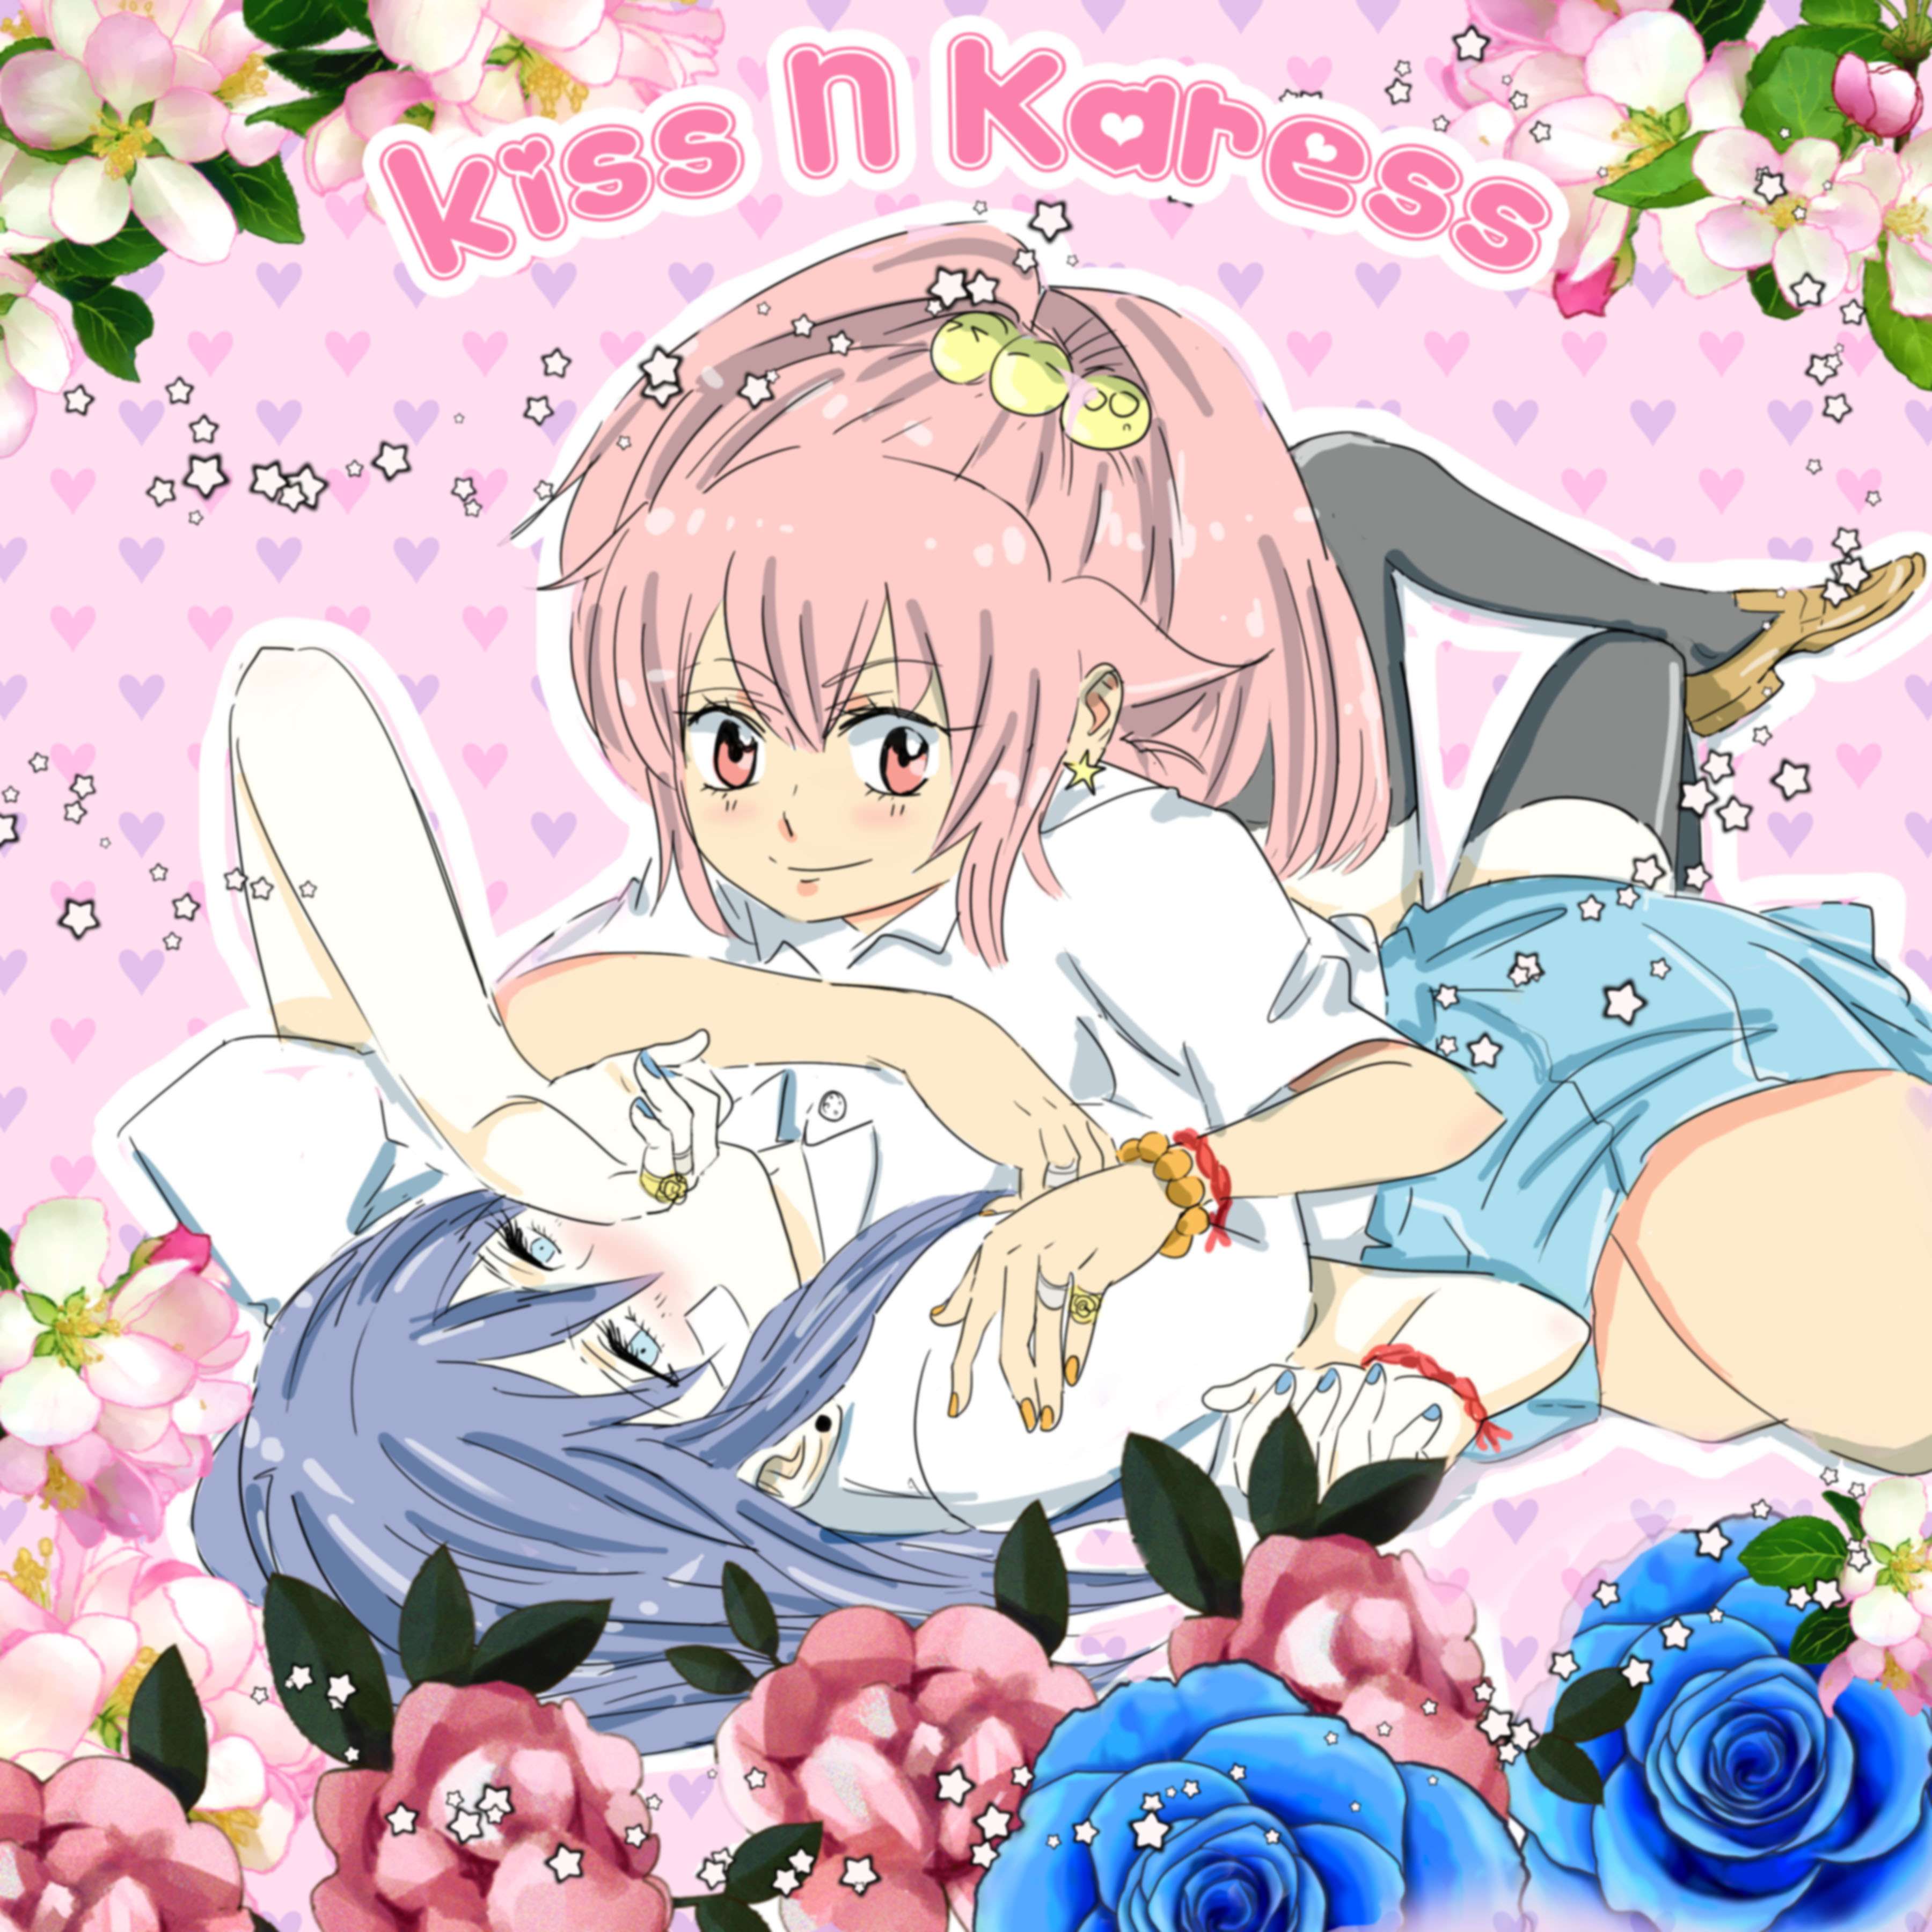 Kiss n Karess ! - chapter 1 - #2